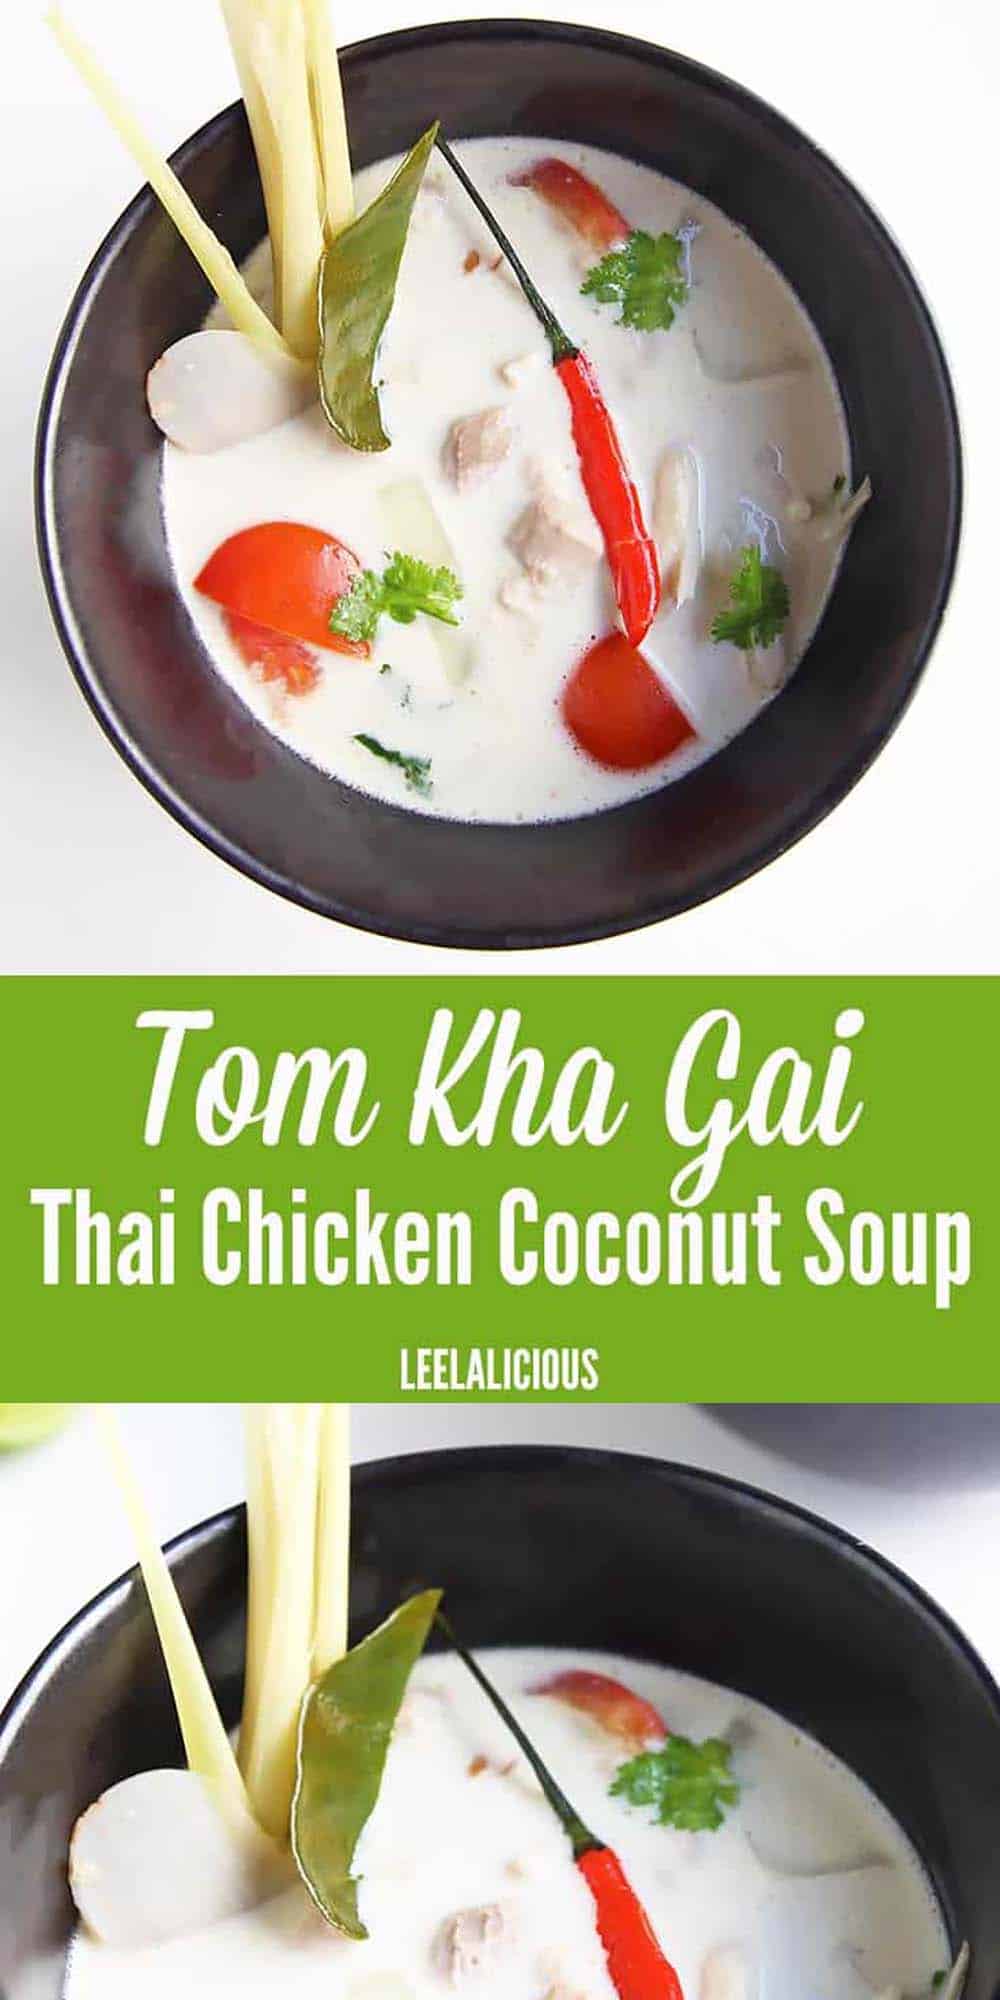 Tom Kha Gai - Thai Chicken Coconut Soup